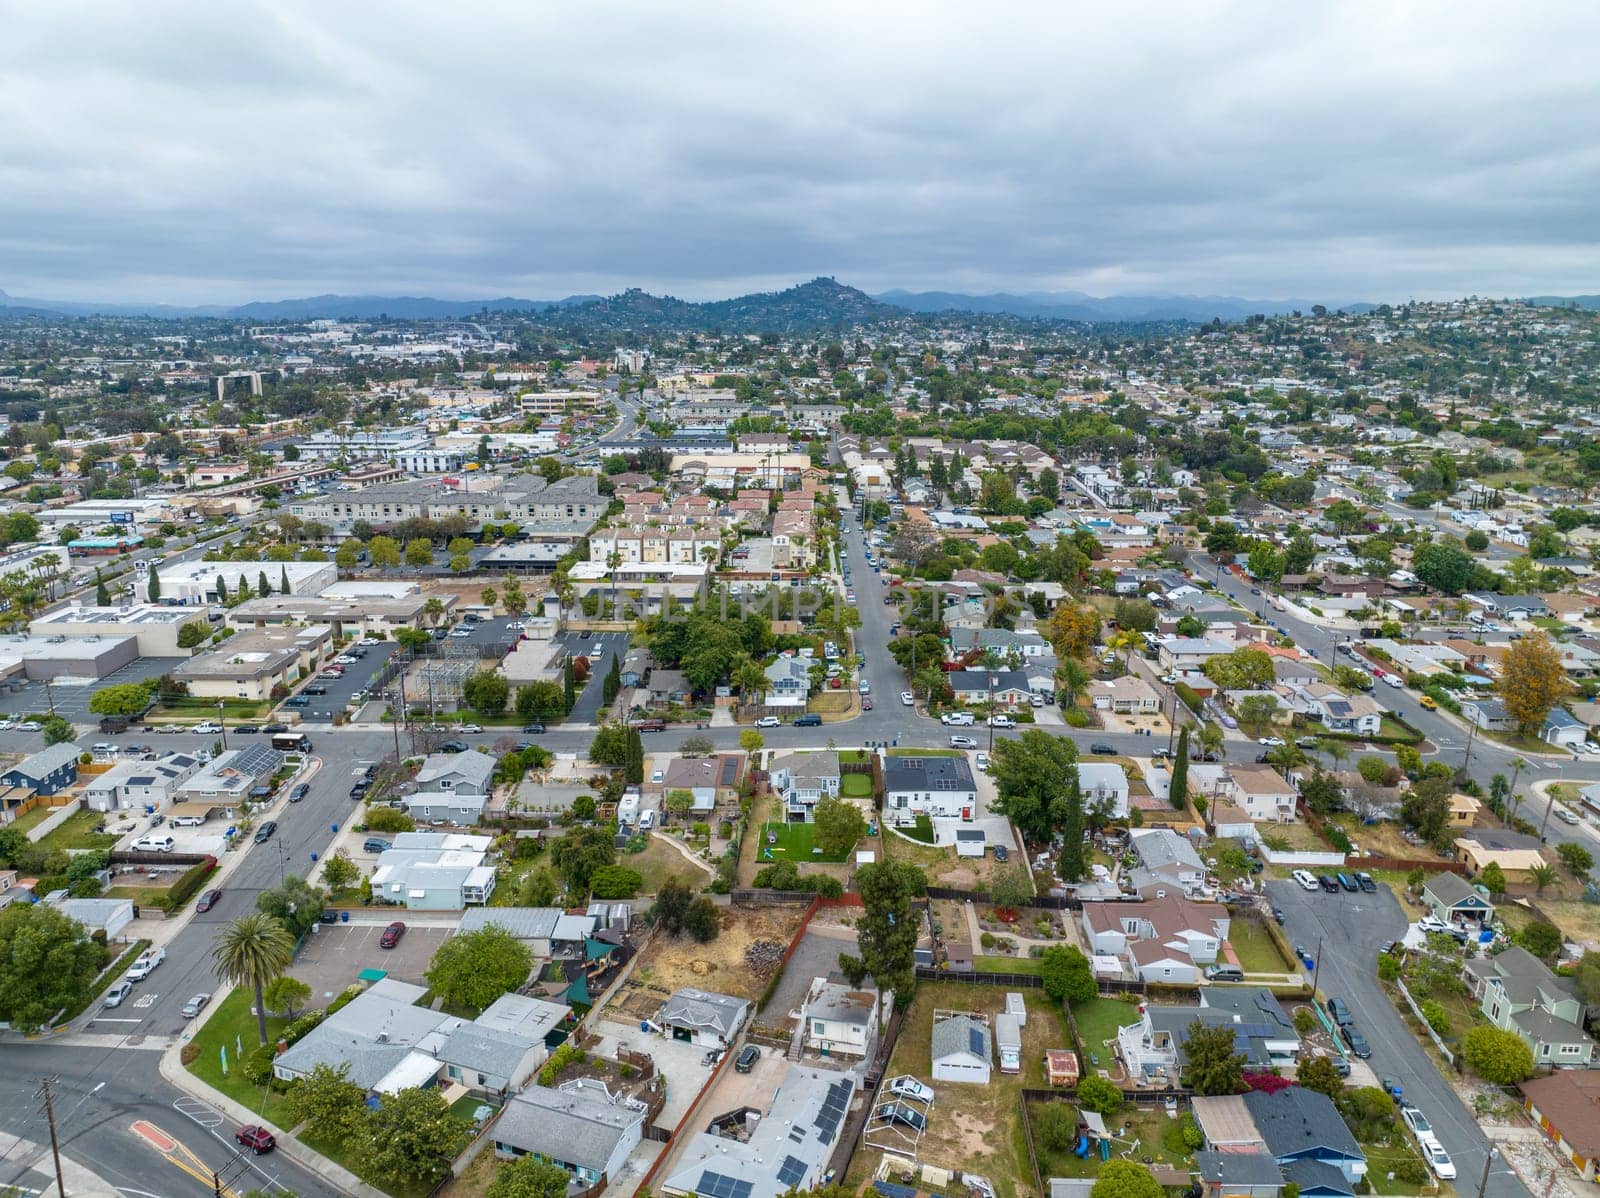 Aerial view of house in La Mesa City in San Diego, California, USA by Bonandbon